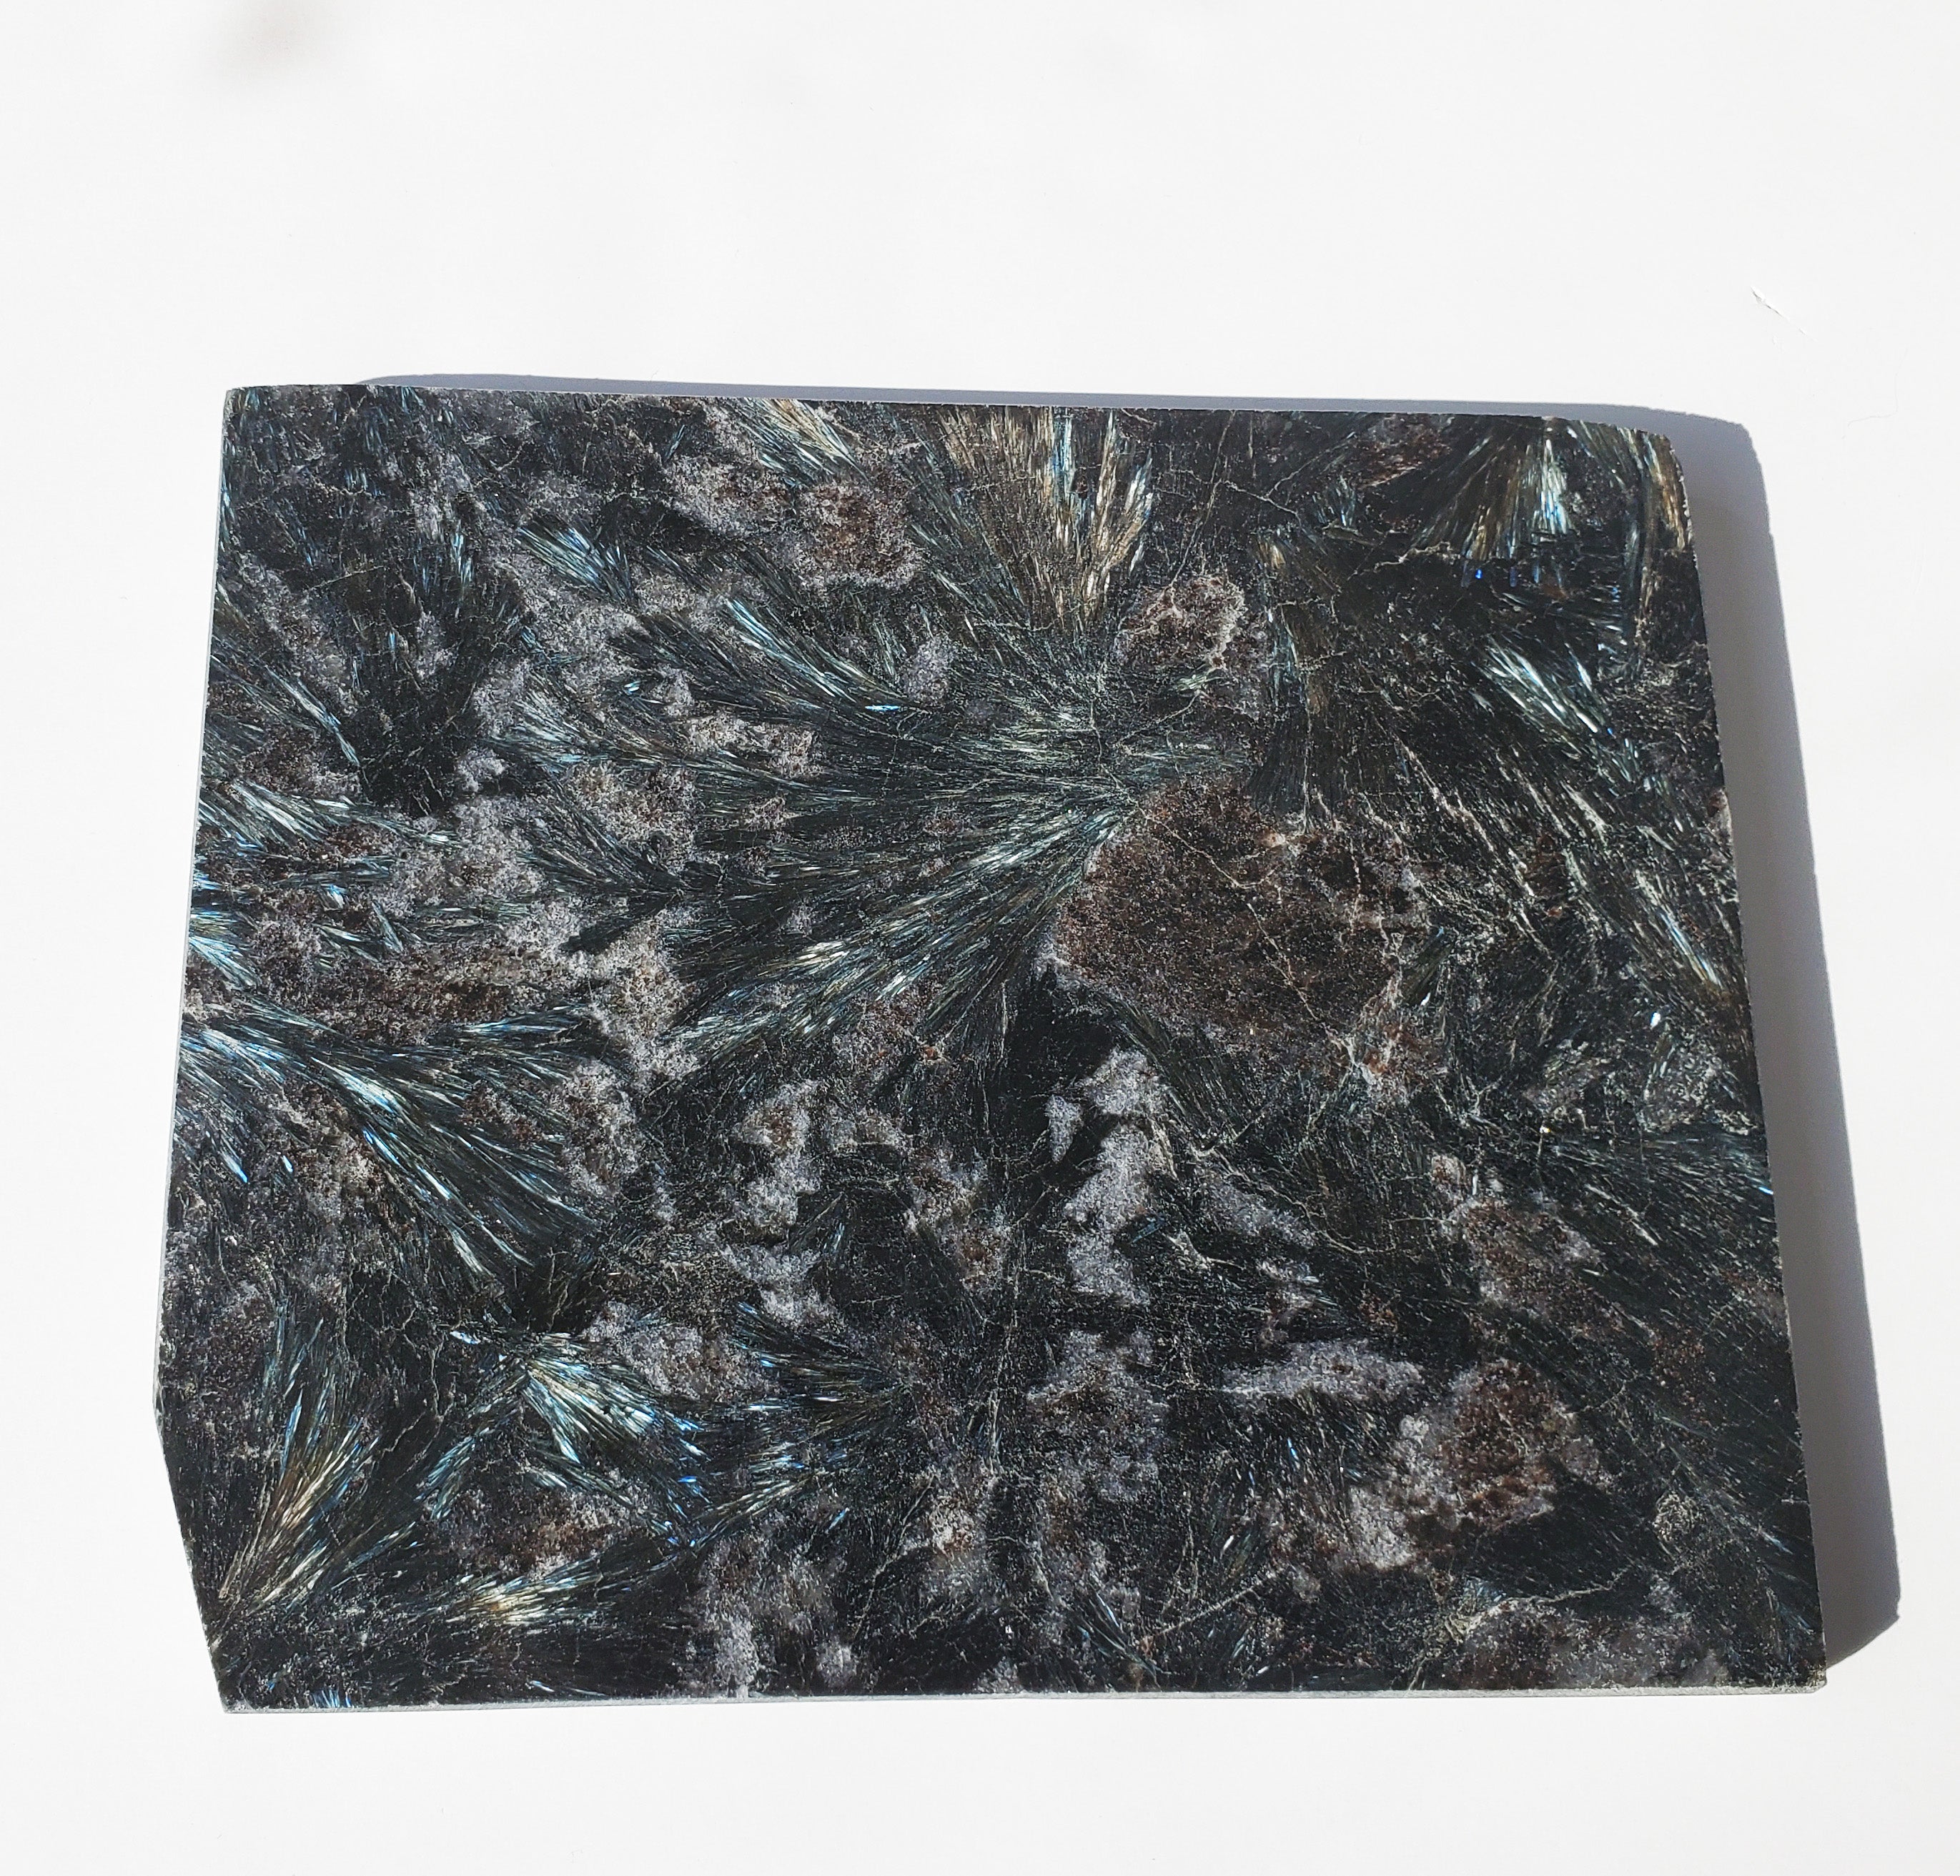 Arfvedsonite stone mineral slab - plate - very flashy